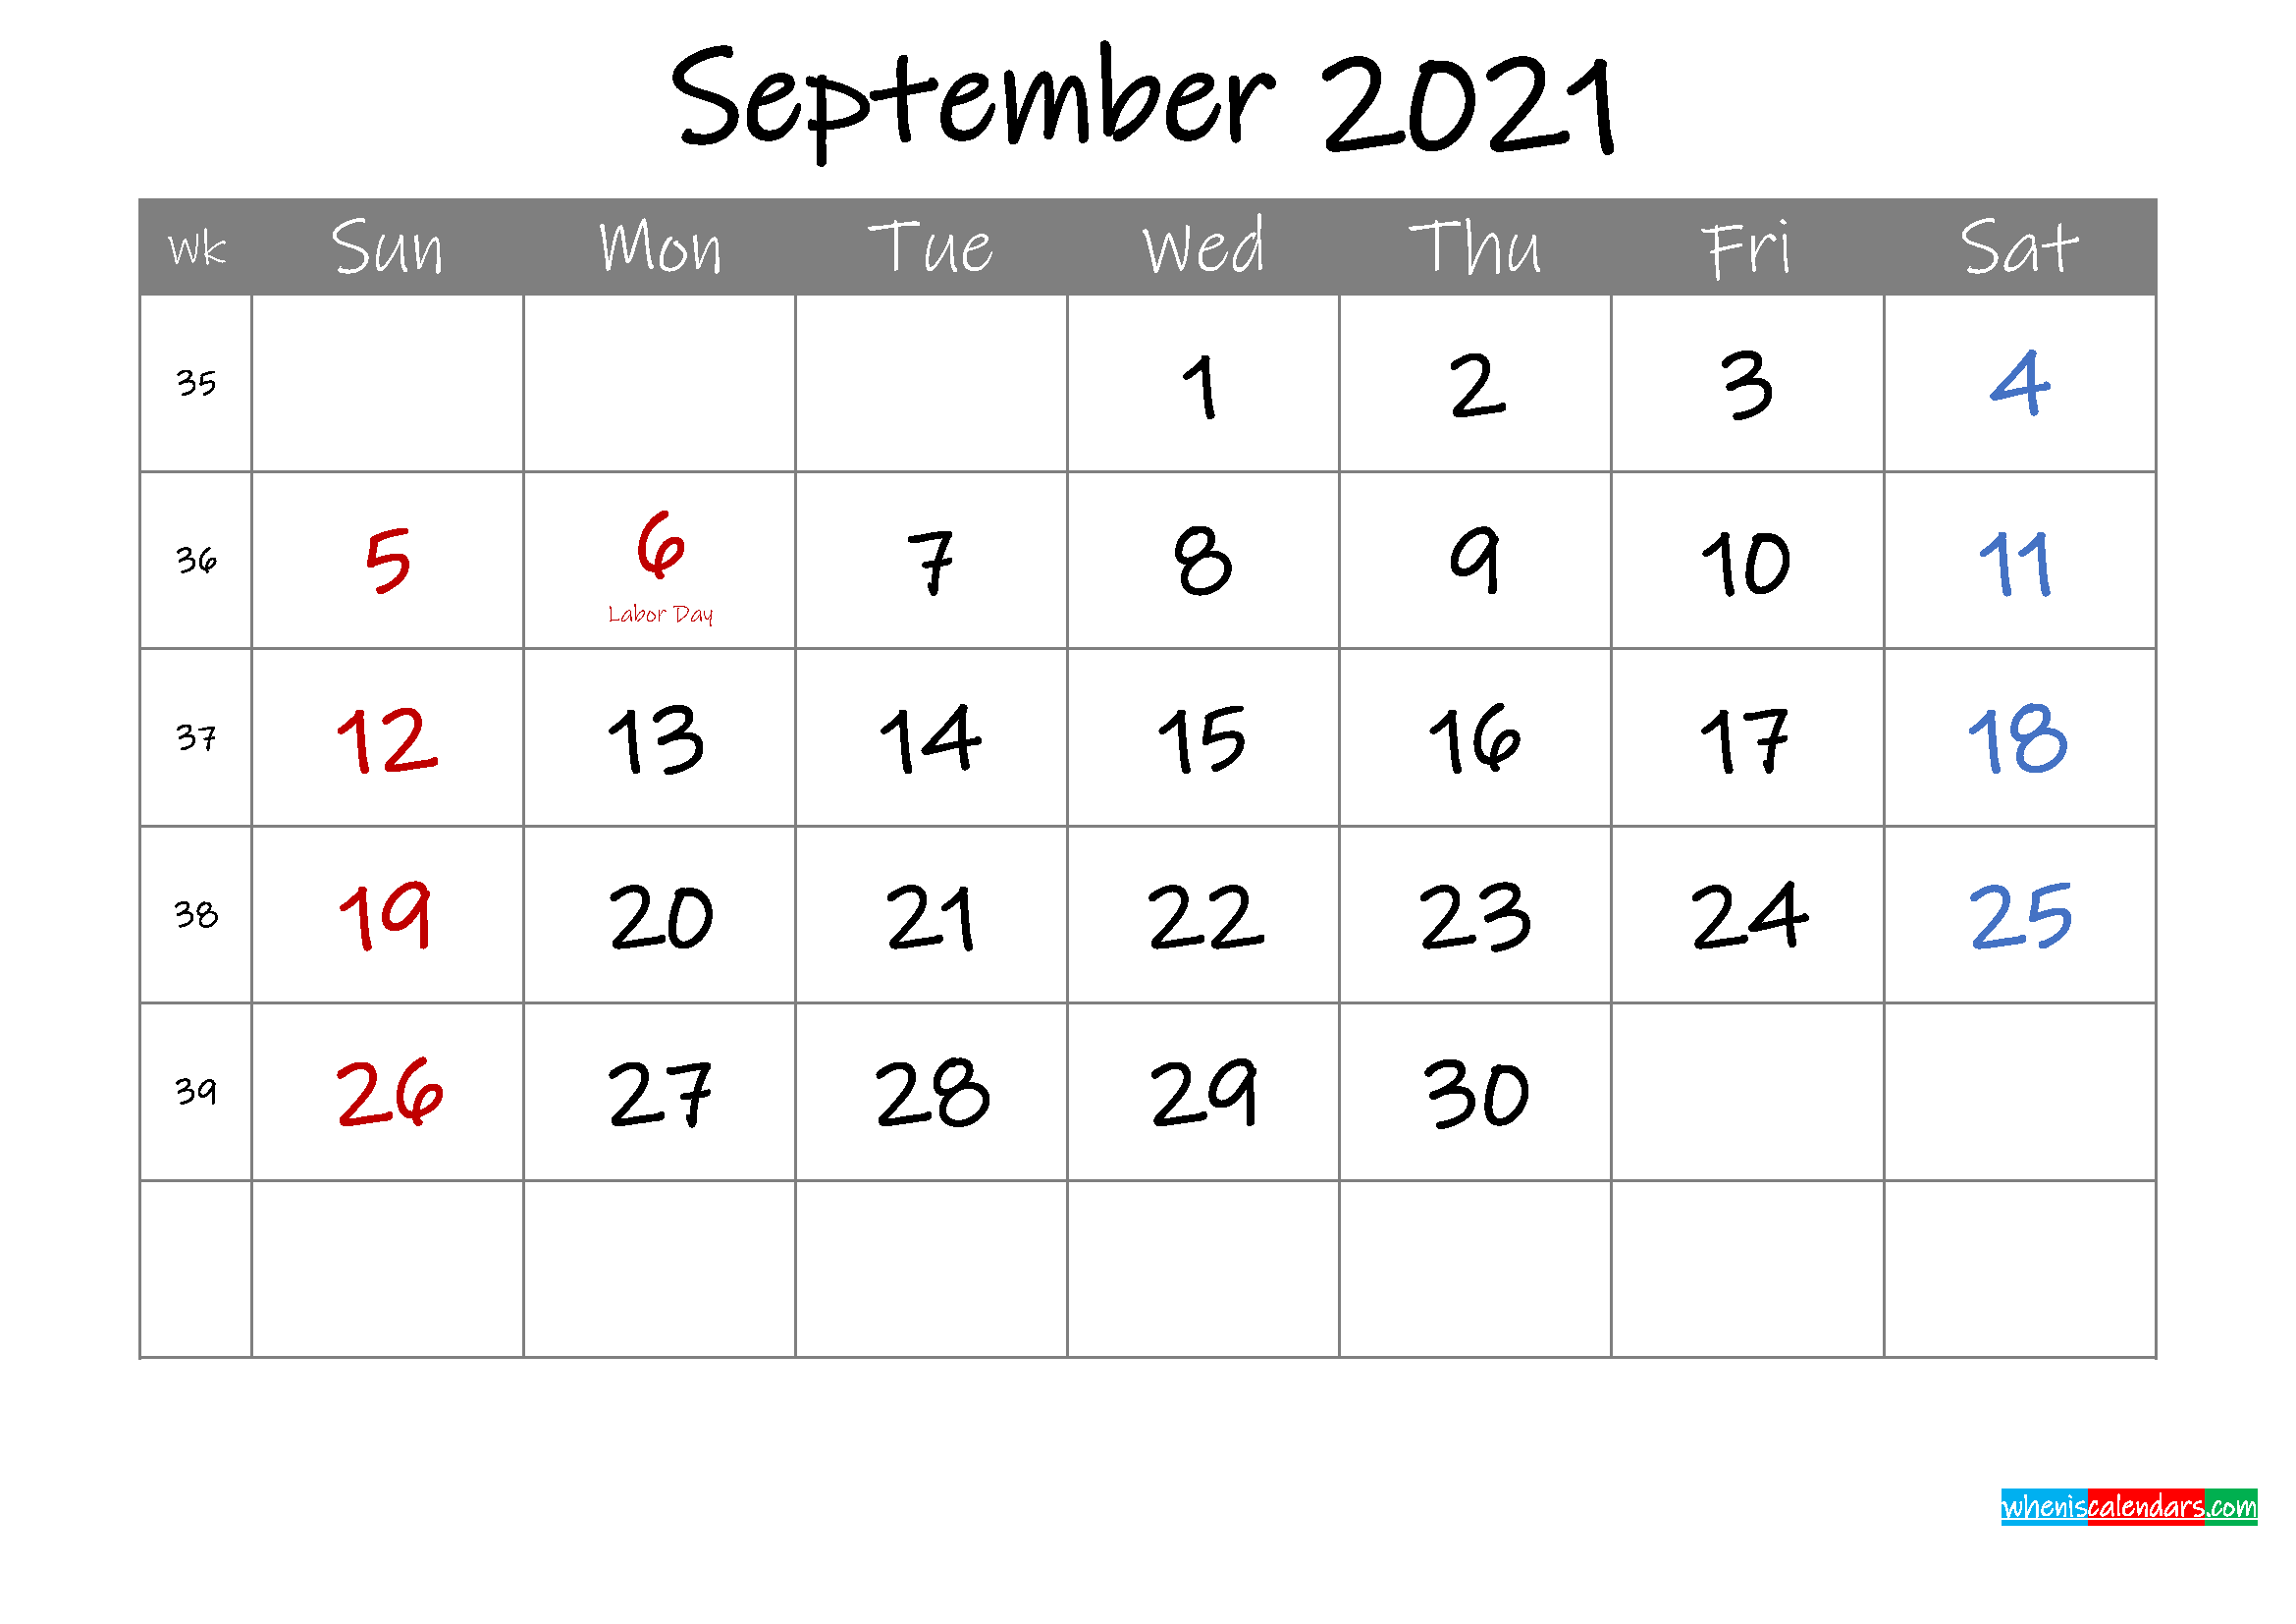 Editable September 2021 Calendar With Holidays - Template Ink21m9